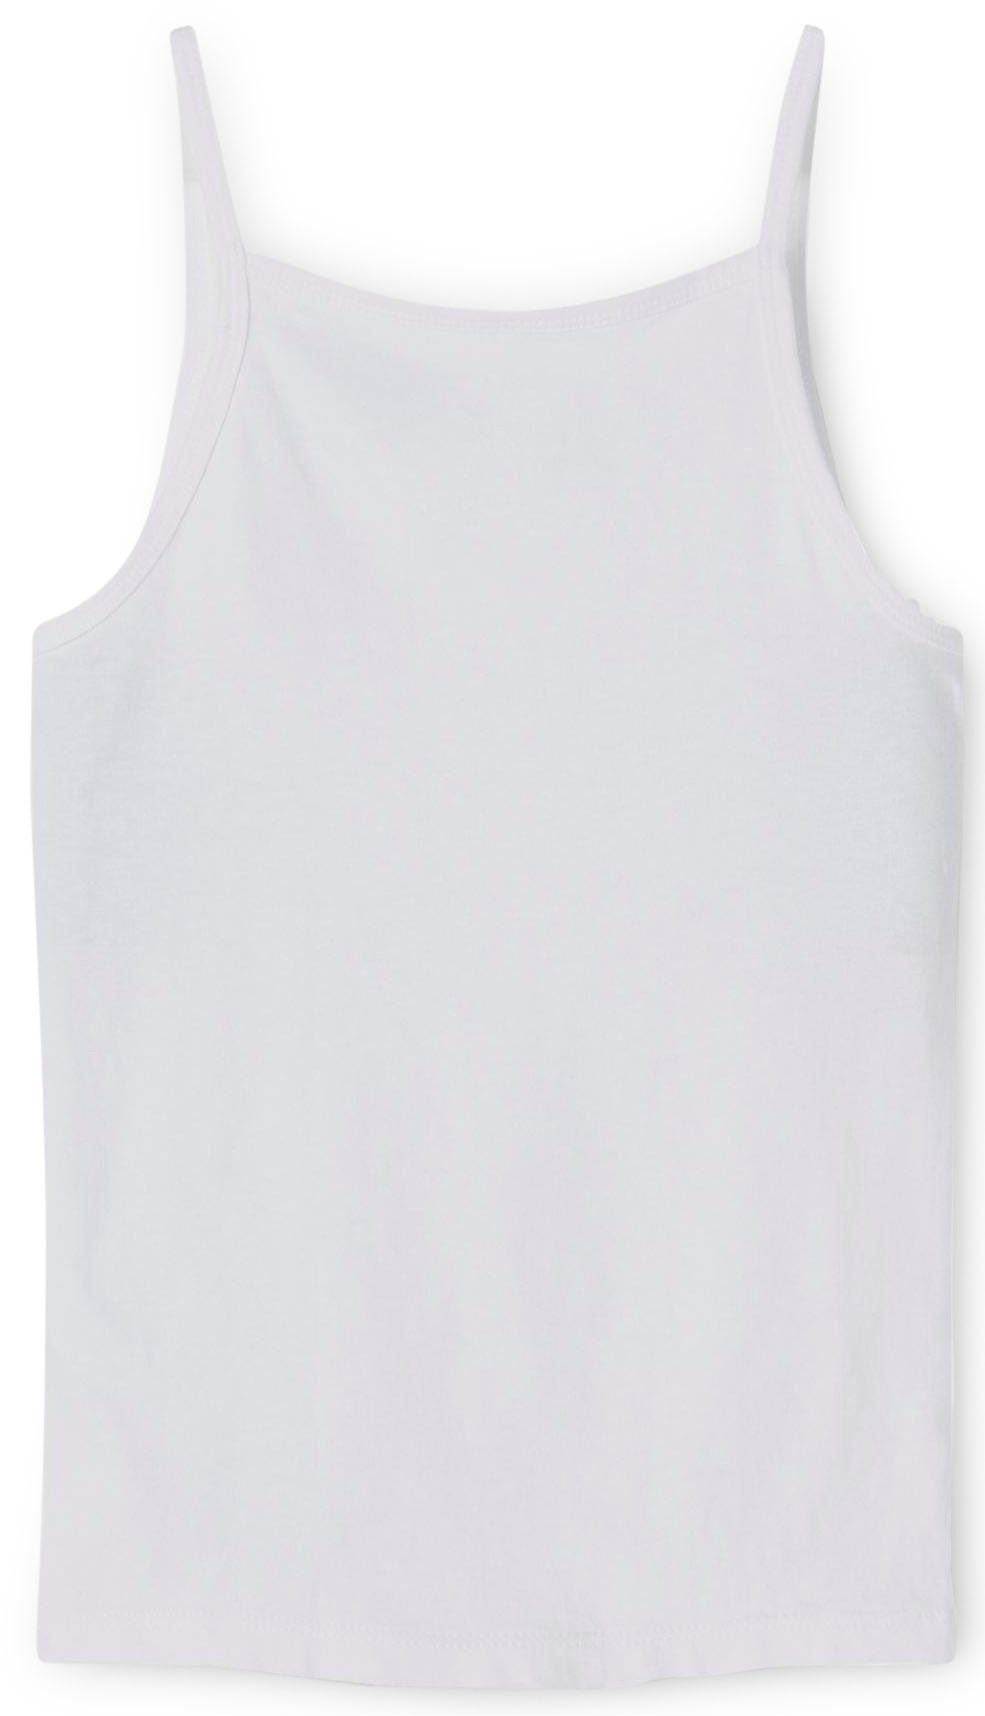 Name It bright white Unterhemd (Packung, 2-St)